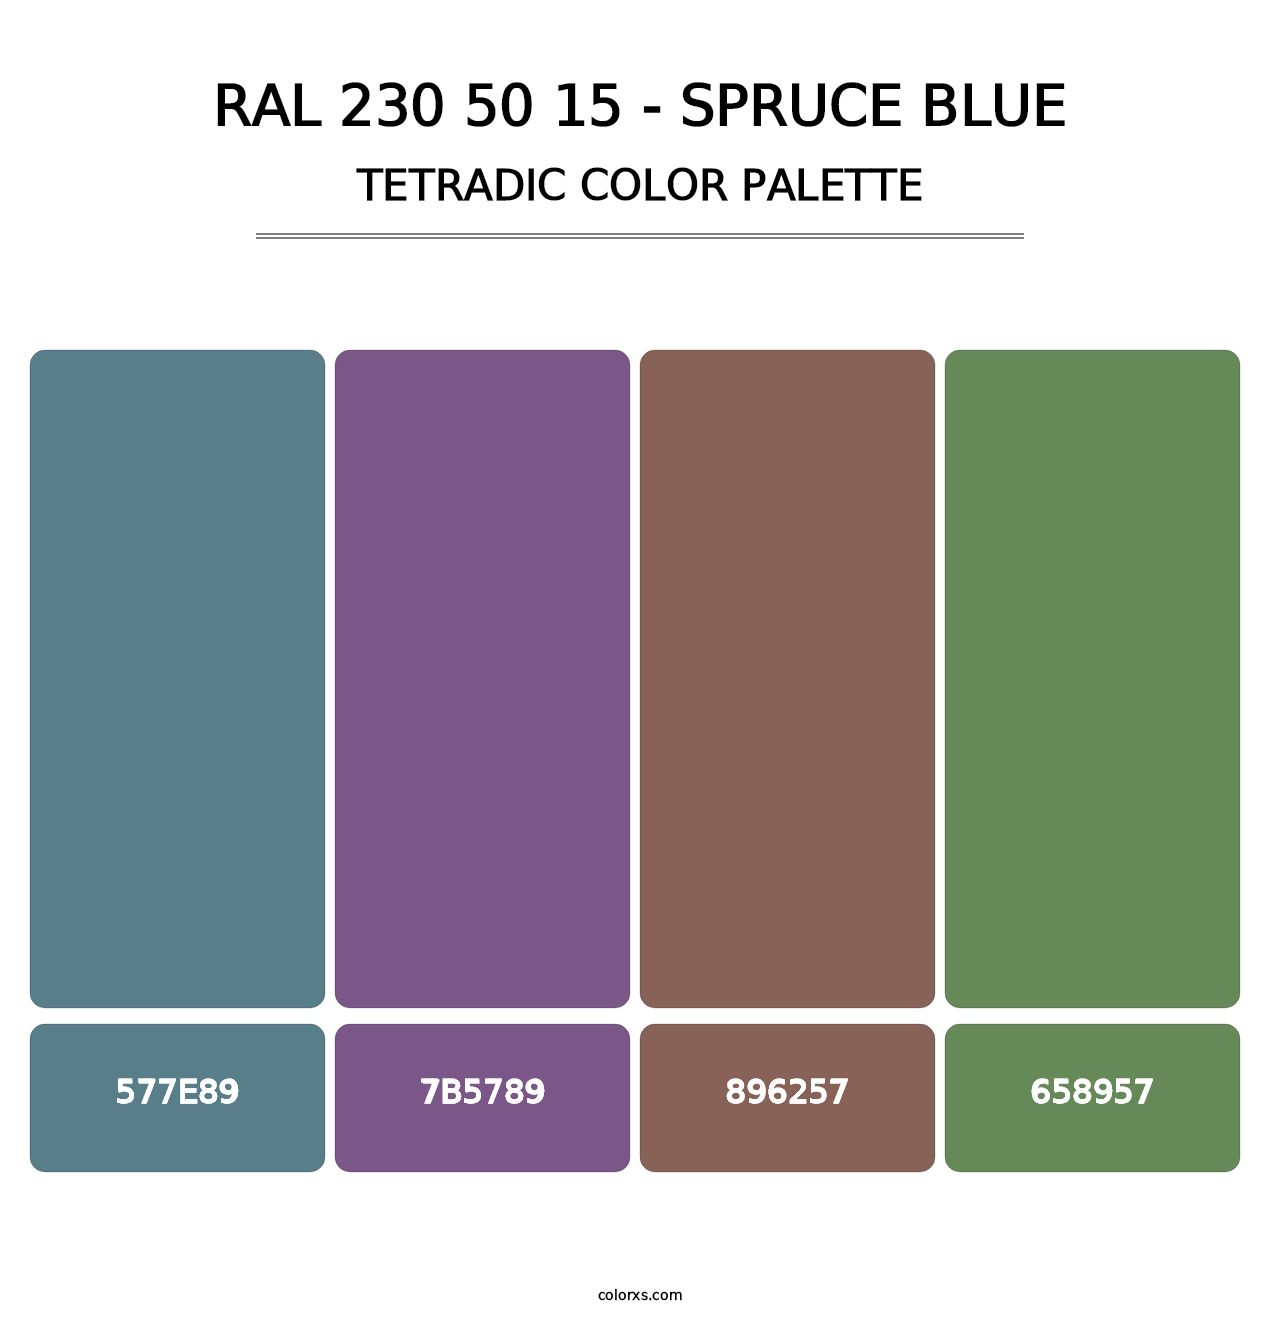 RAL 230 50 15 - Spruce Blue - Tetradic Color Palette